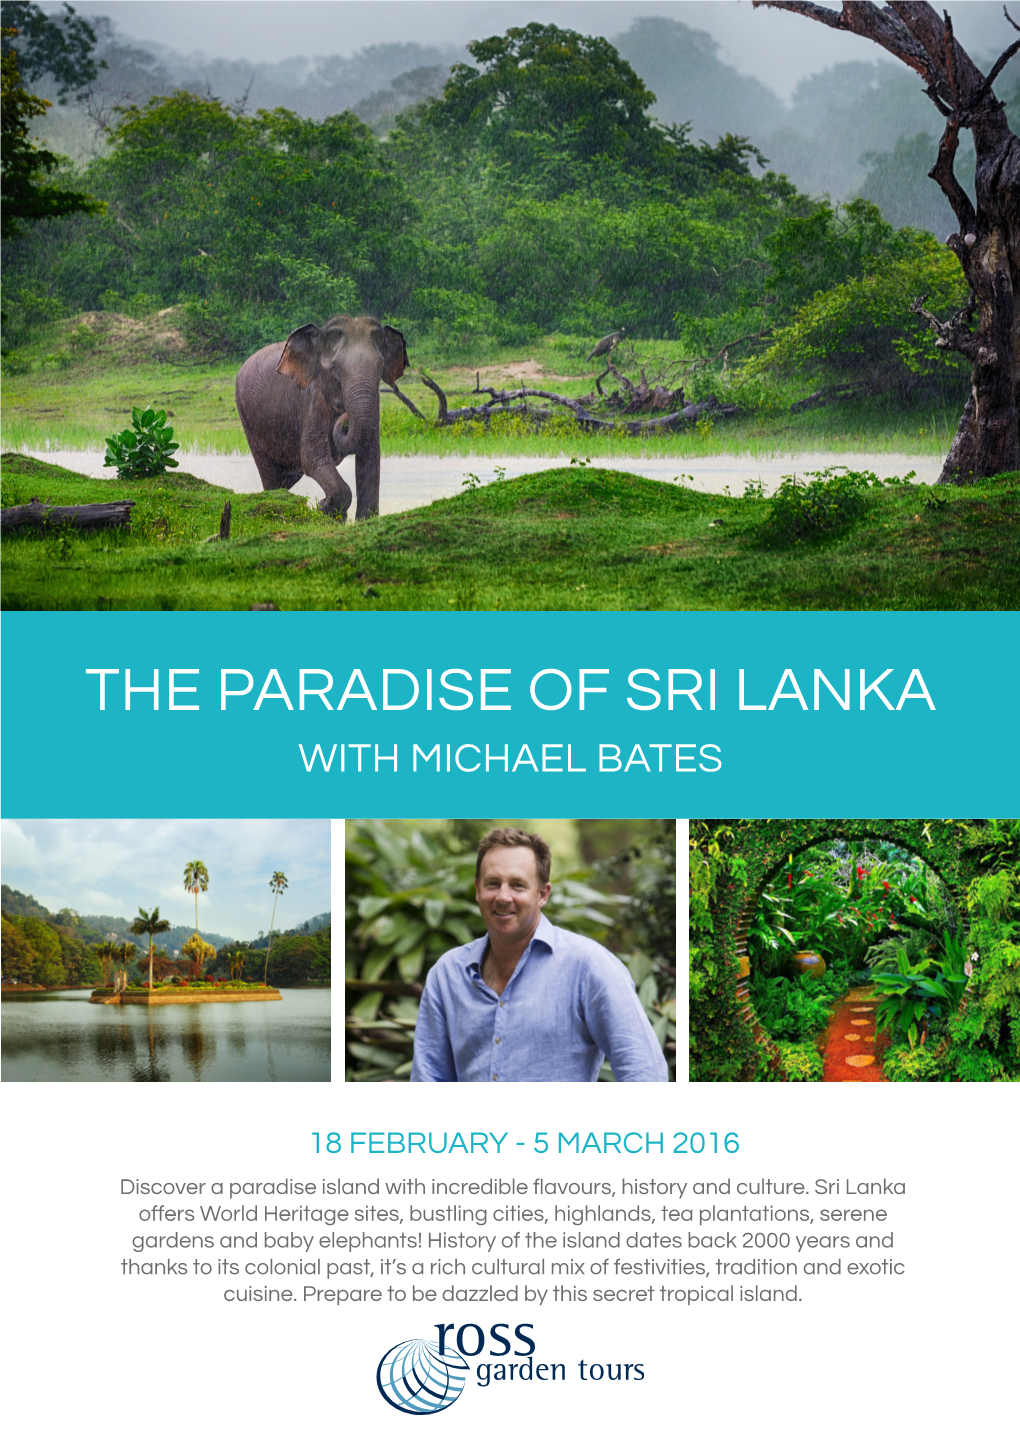 The Paradise of Sri Lanka with Michael Bates